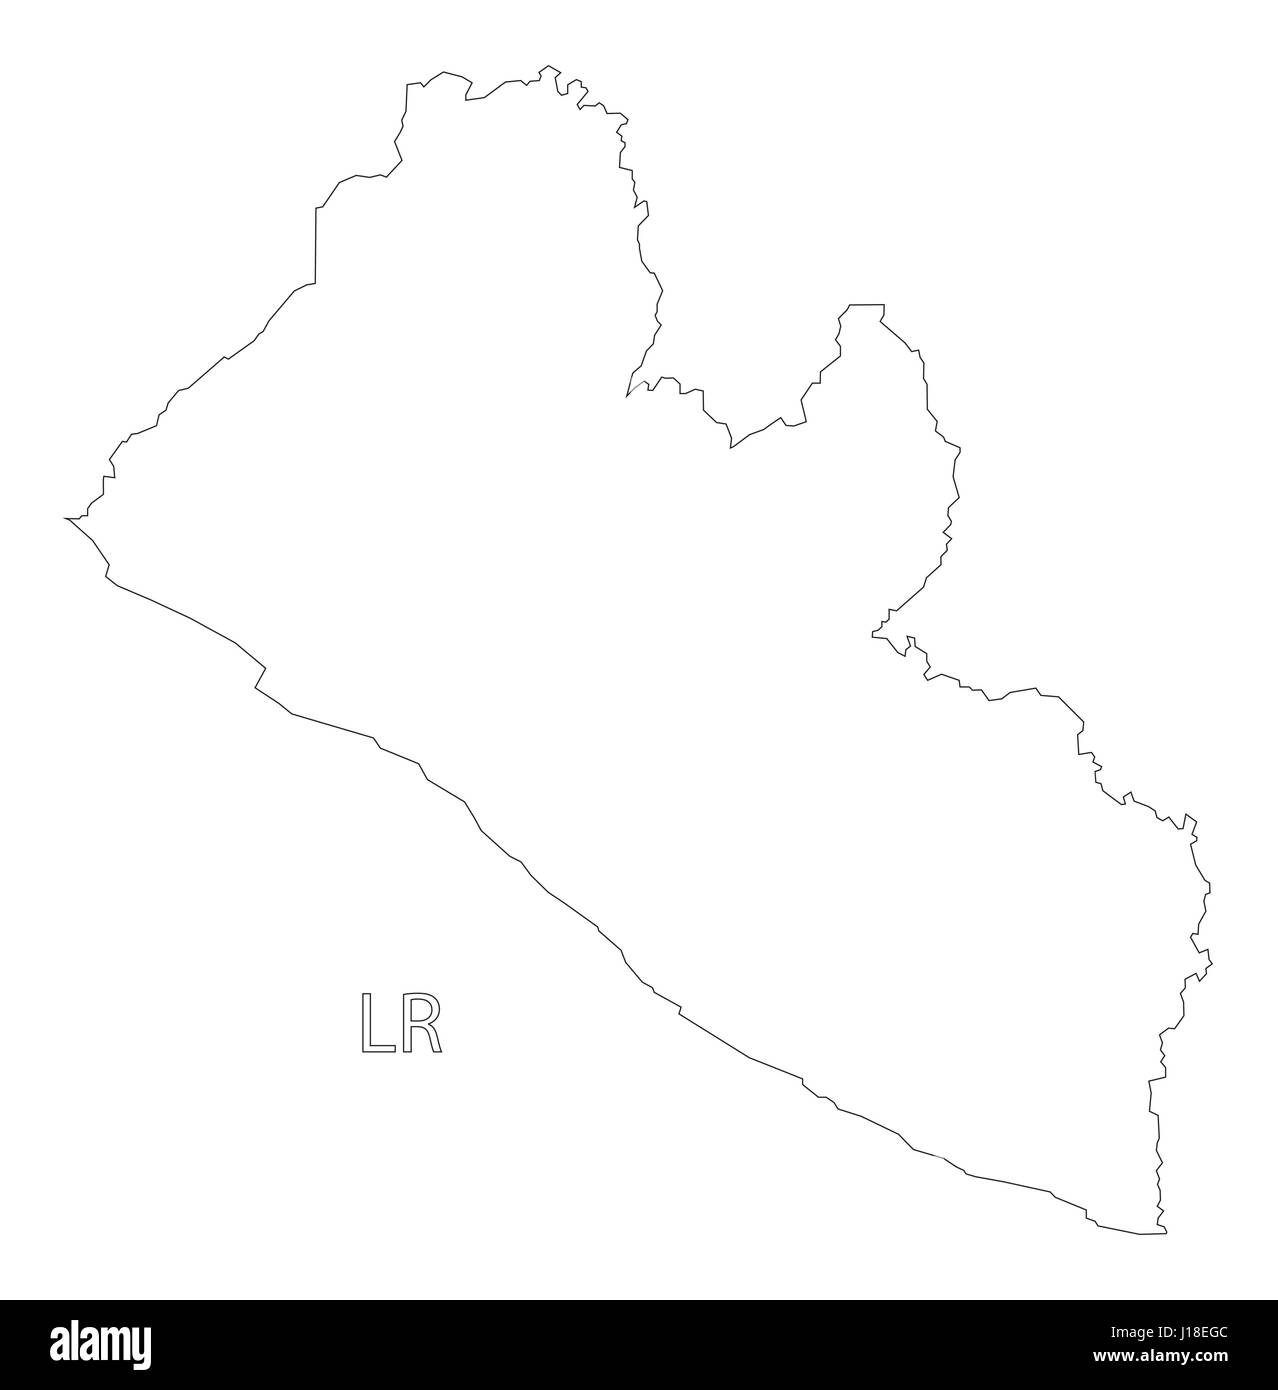 Liberia outline silhouette map illustration Stock Vector